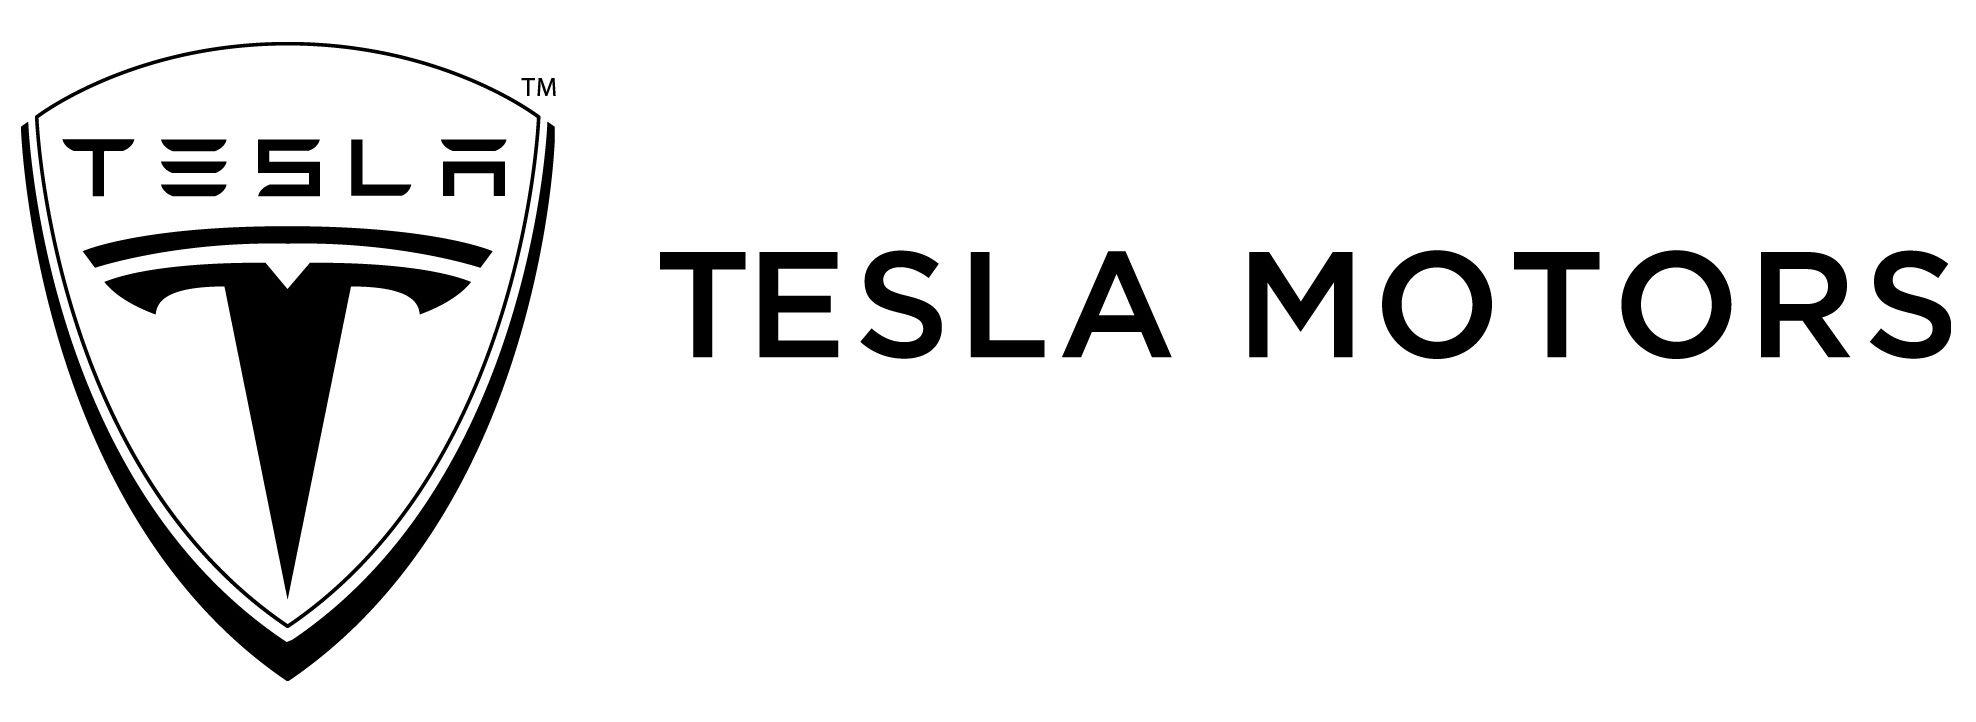 Tesla Roadster Logo - Tesla Motors | Cartype